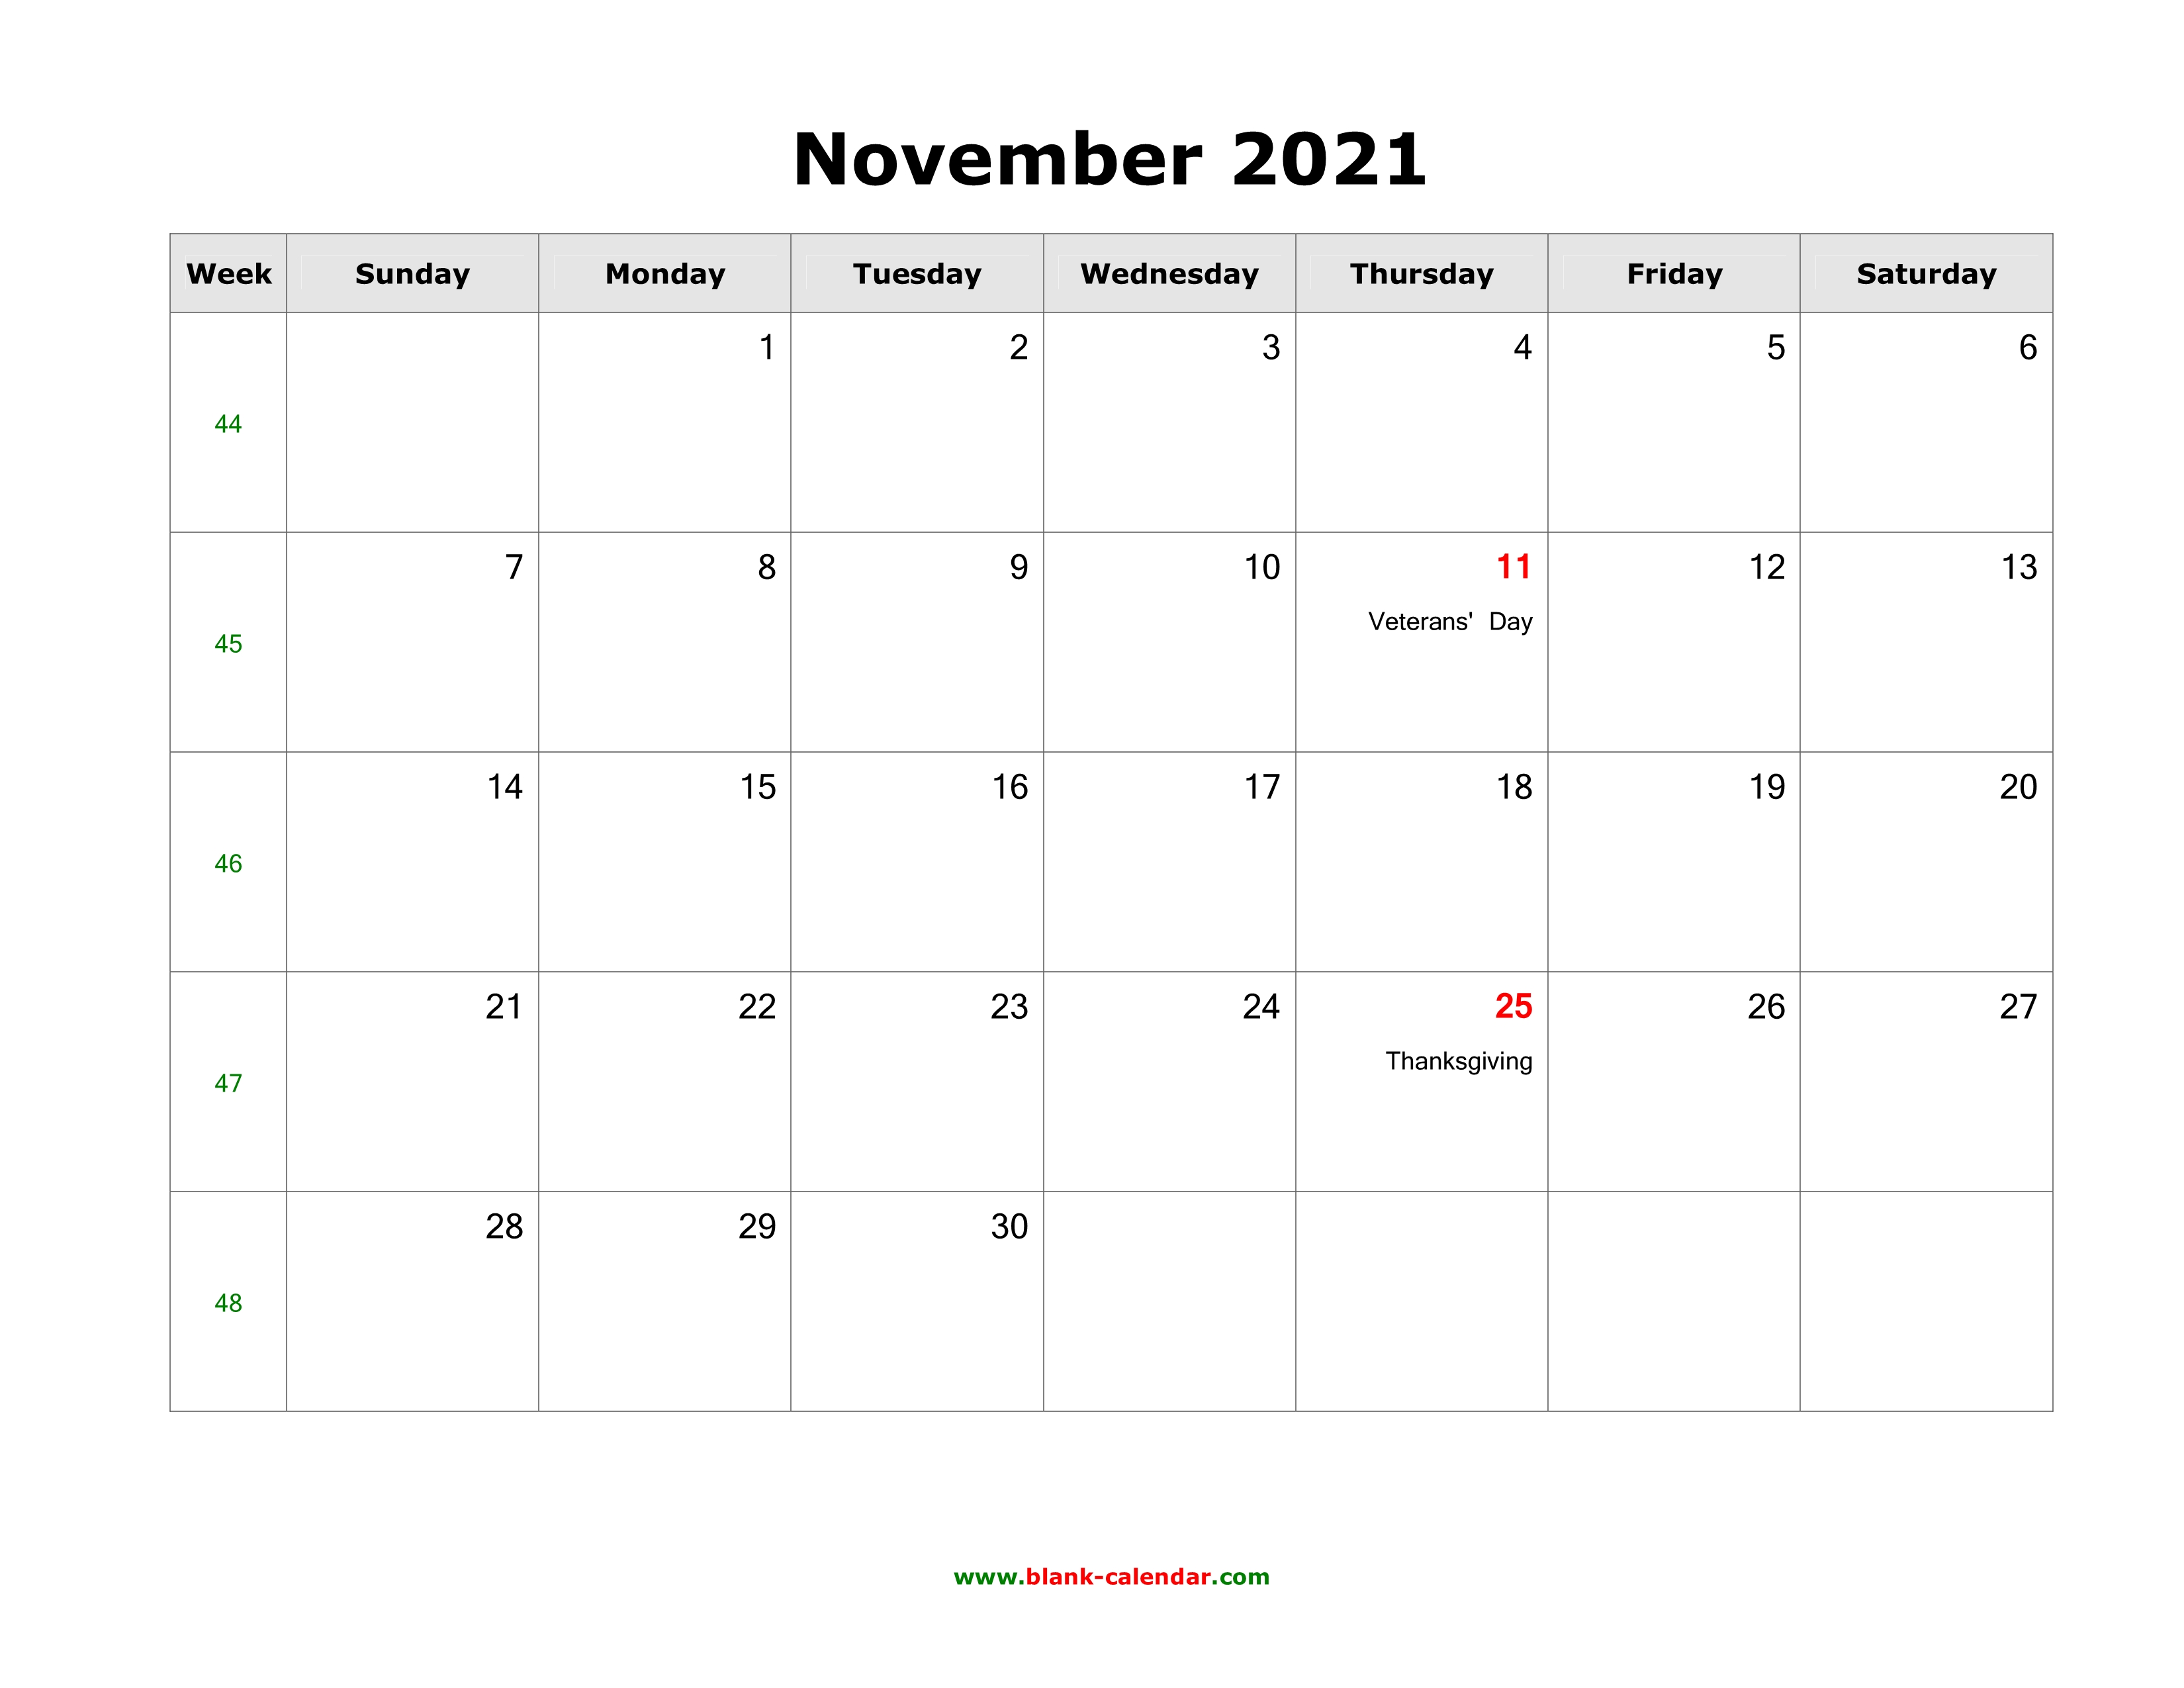 us calendar 2021 holidays november